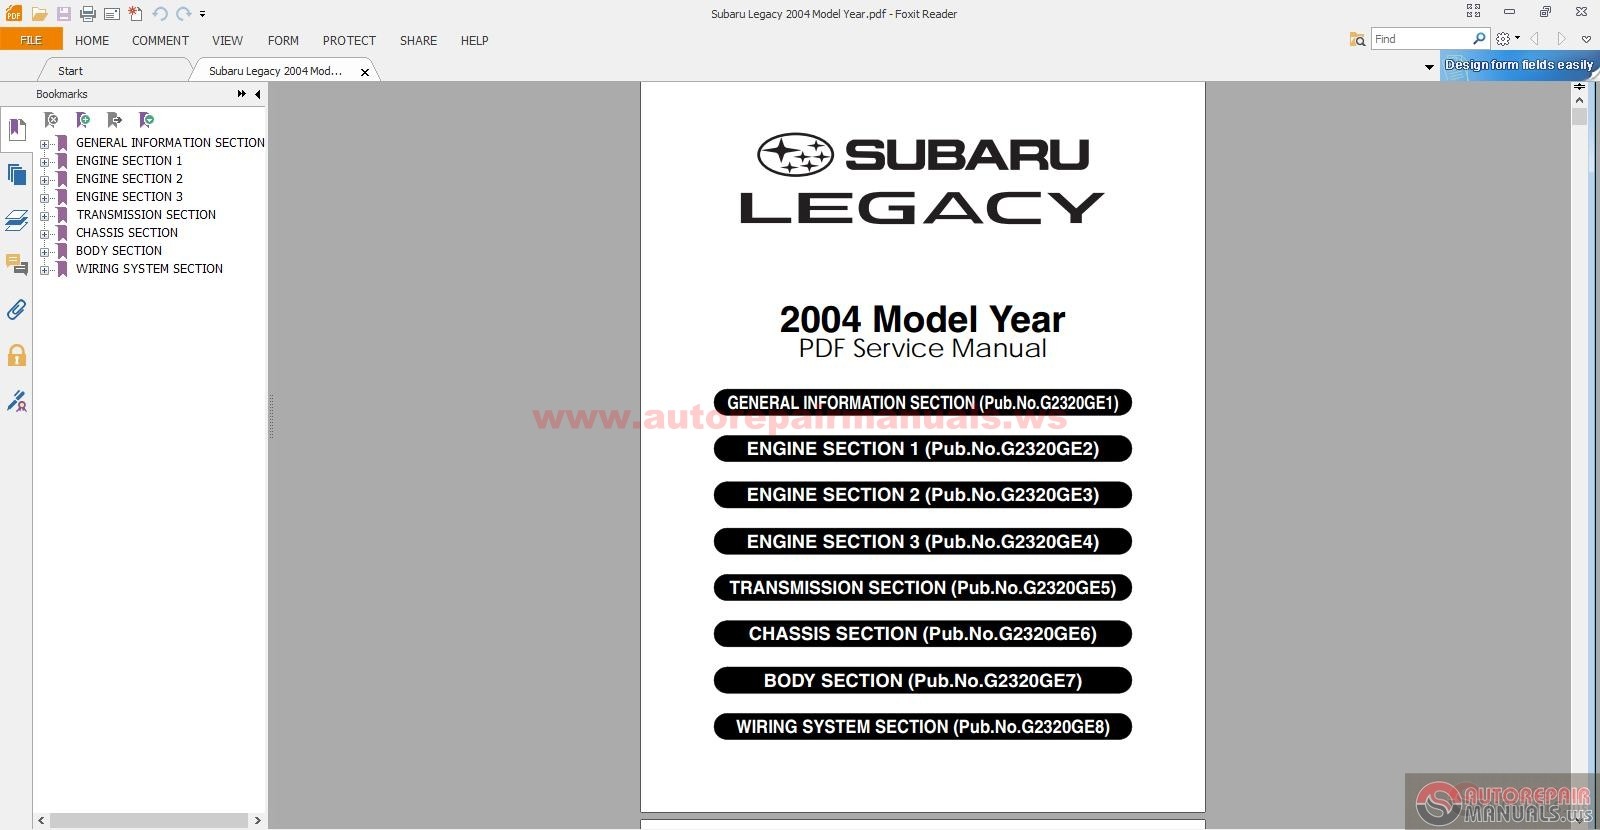 2002 Subaru Outback Service Repair Manuals on Tradebit